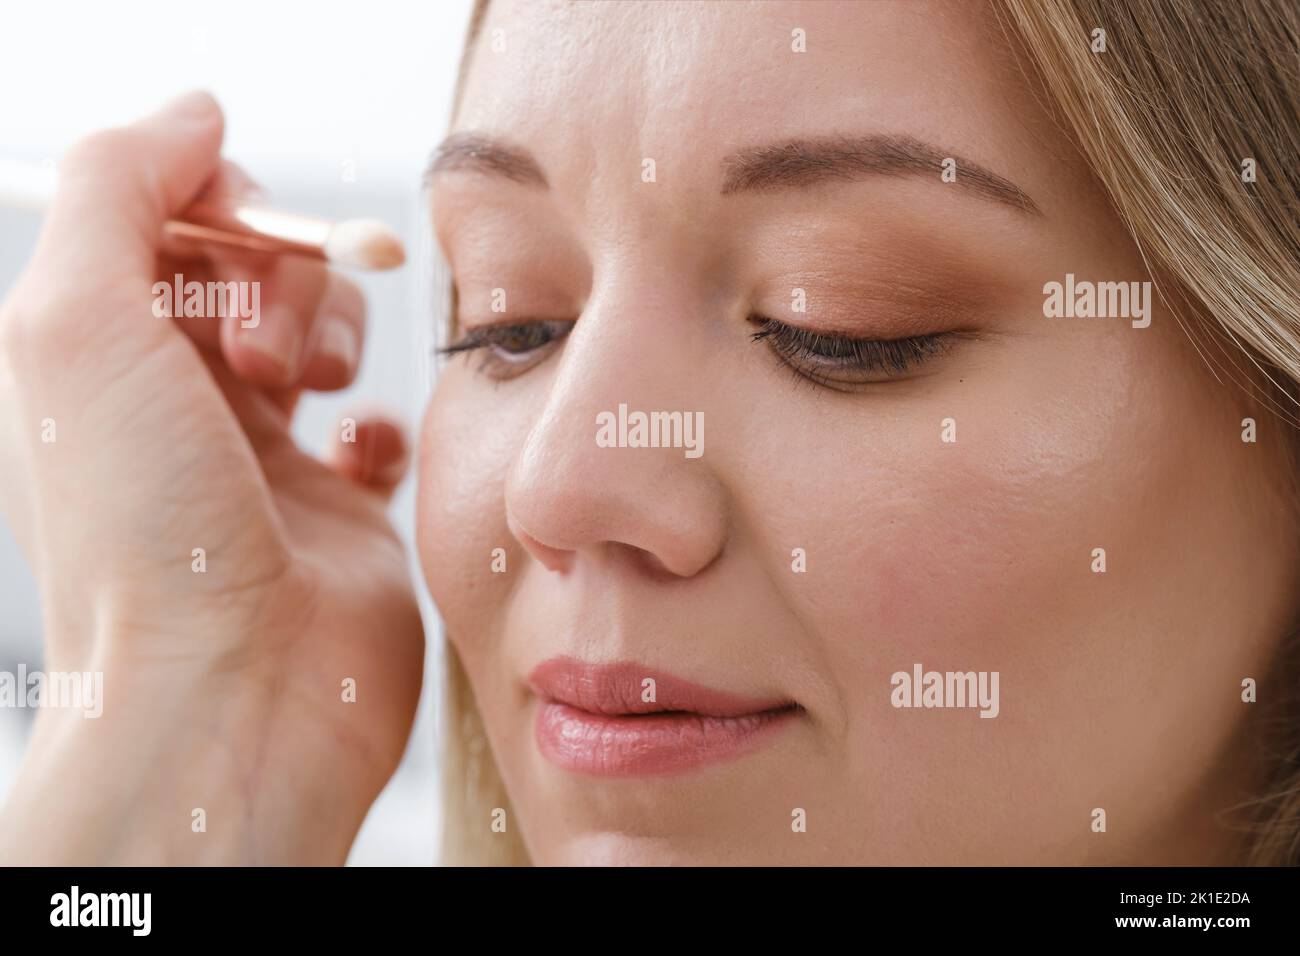 nude eye make-up close-up. woman applying eyeshadow powder. Processional look natural female Stock Photo